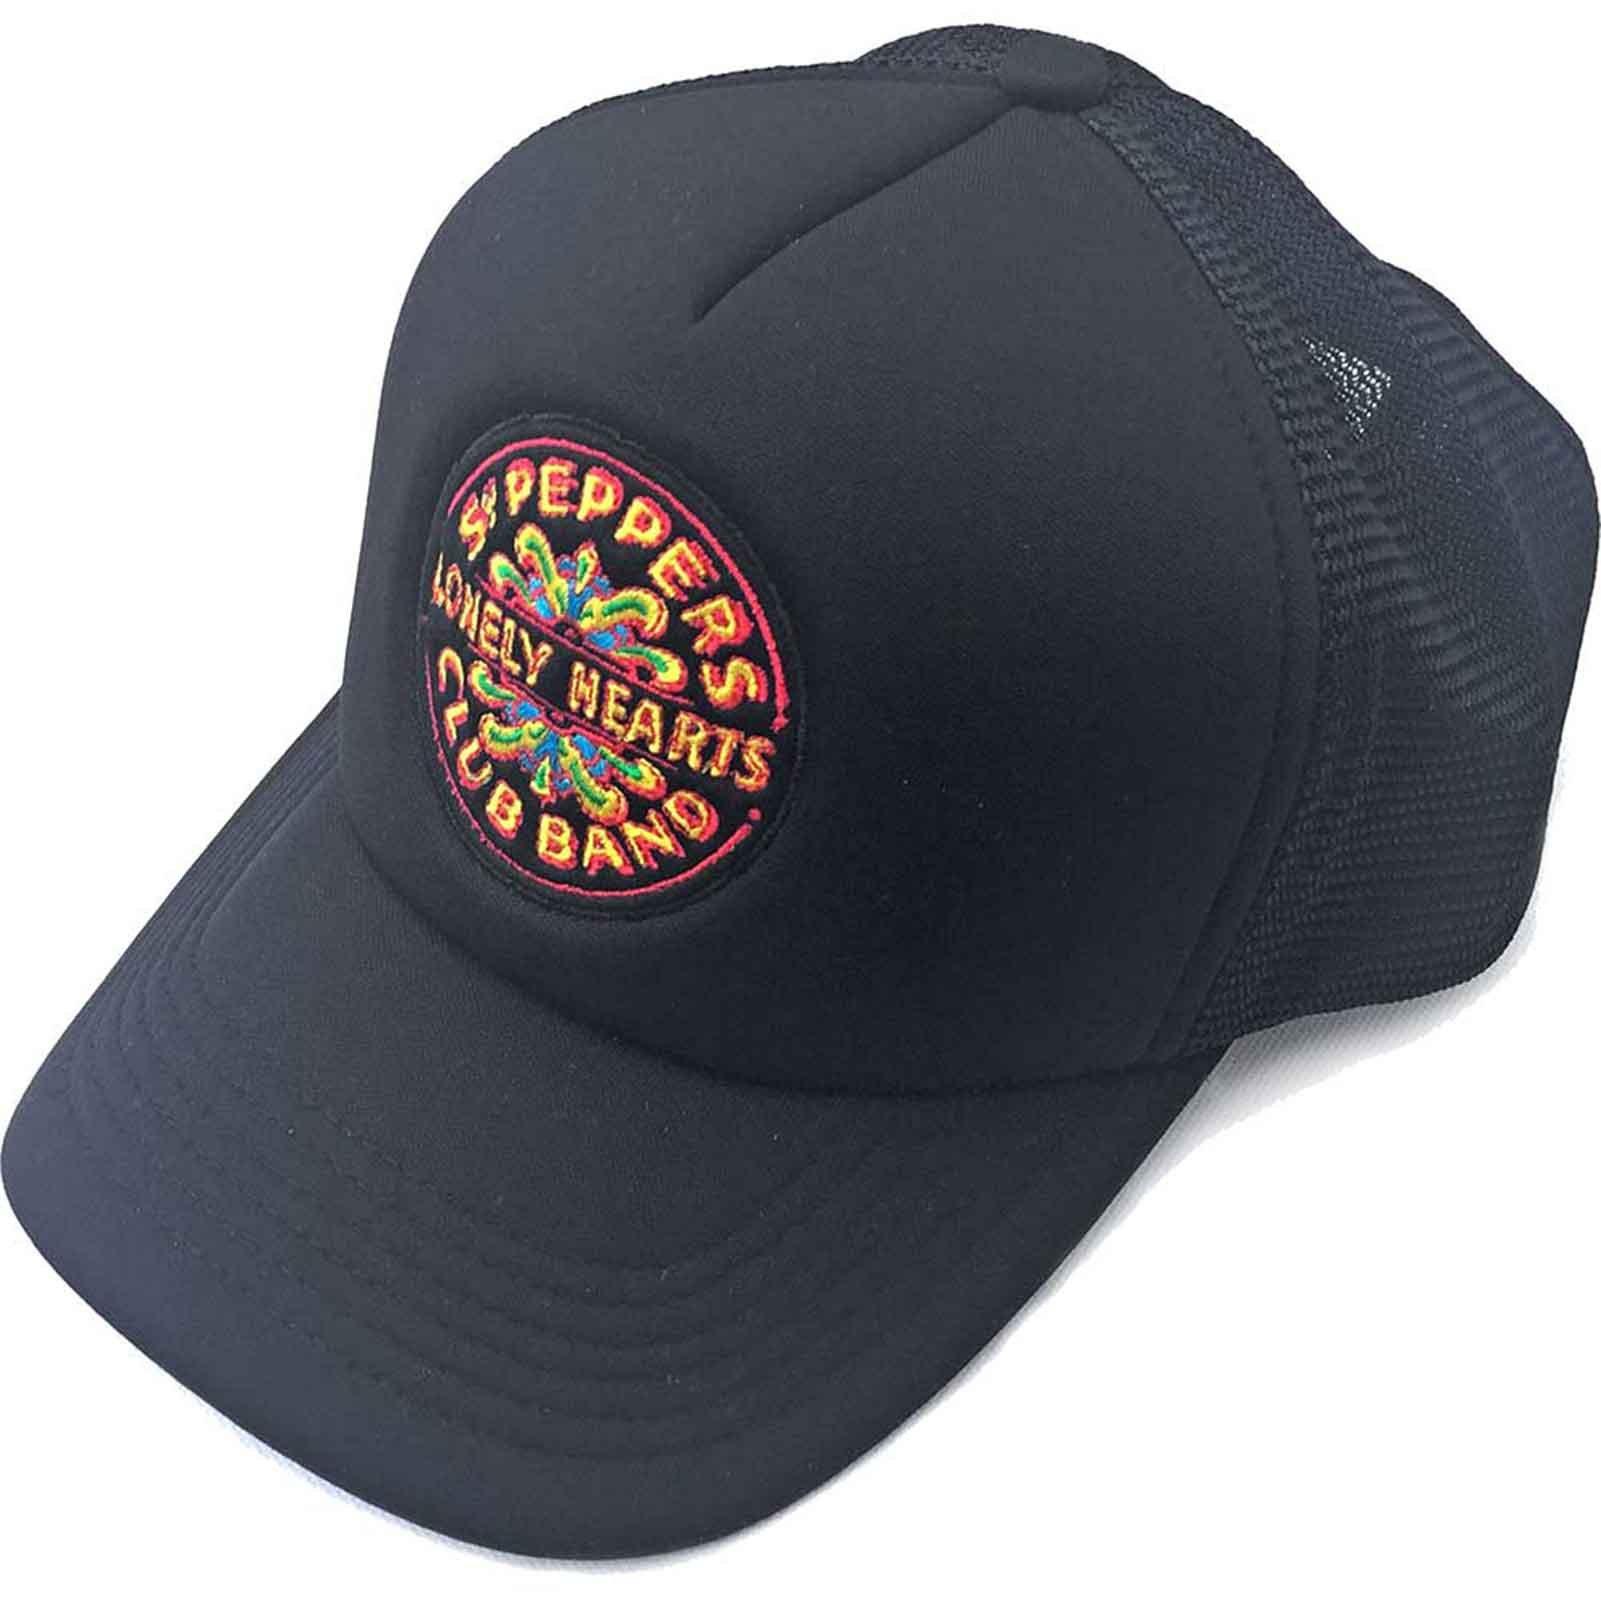 Бейсбольная кепка Trucker с логотипом Sgt Pepper Drum Beatles, черный бейсбольная кепка с ремешком на спине sgt pepper drum beatles белый